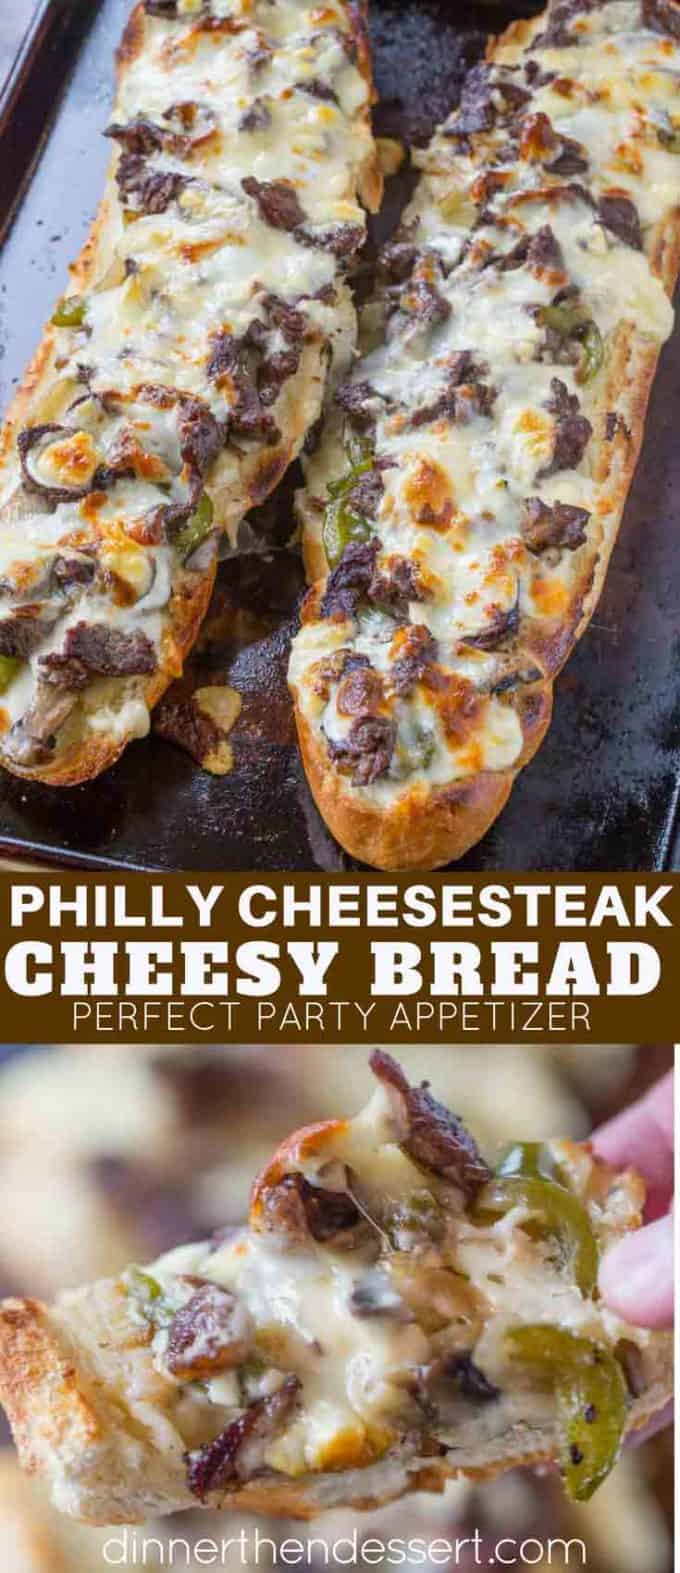 Philly Cheesesteak Cheesy Bread